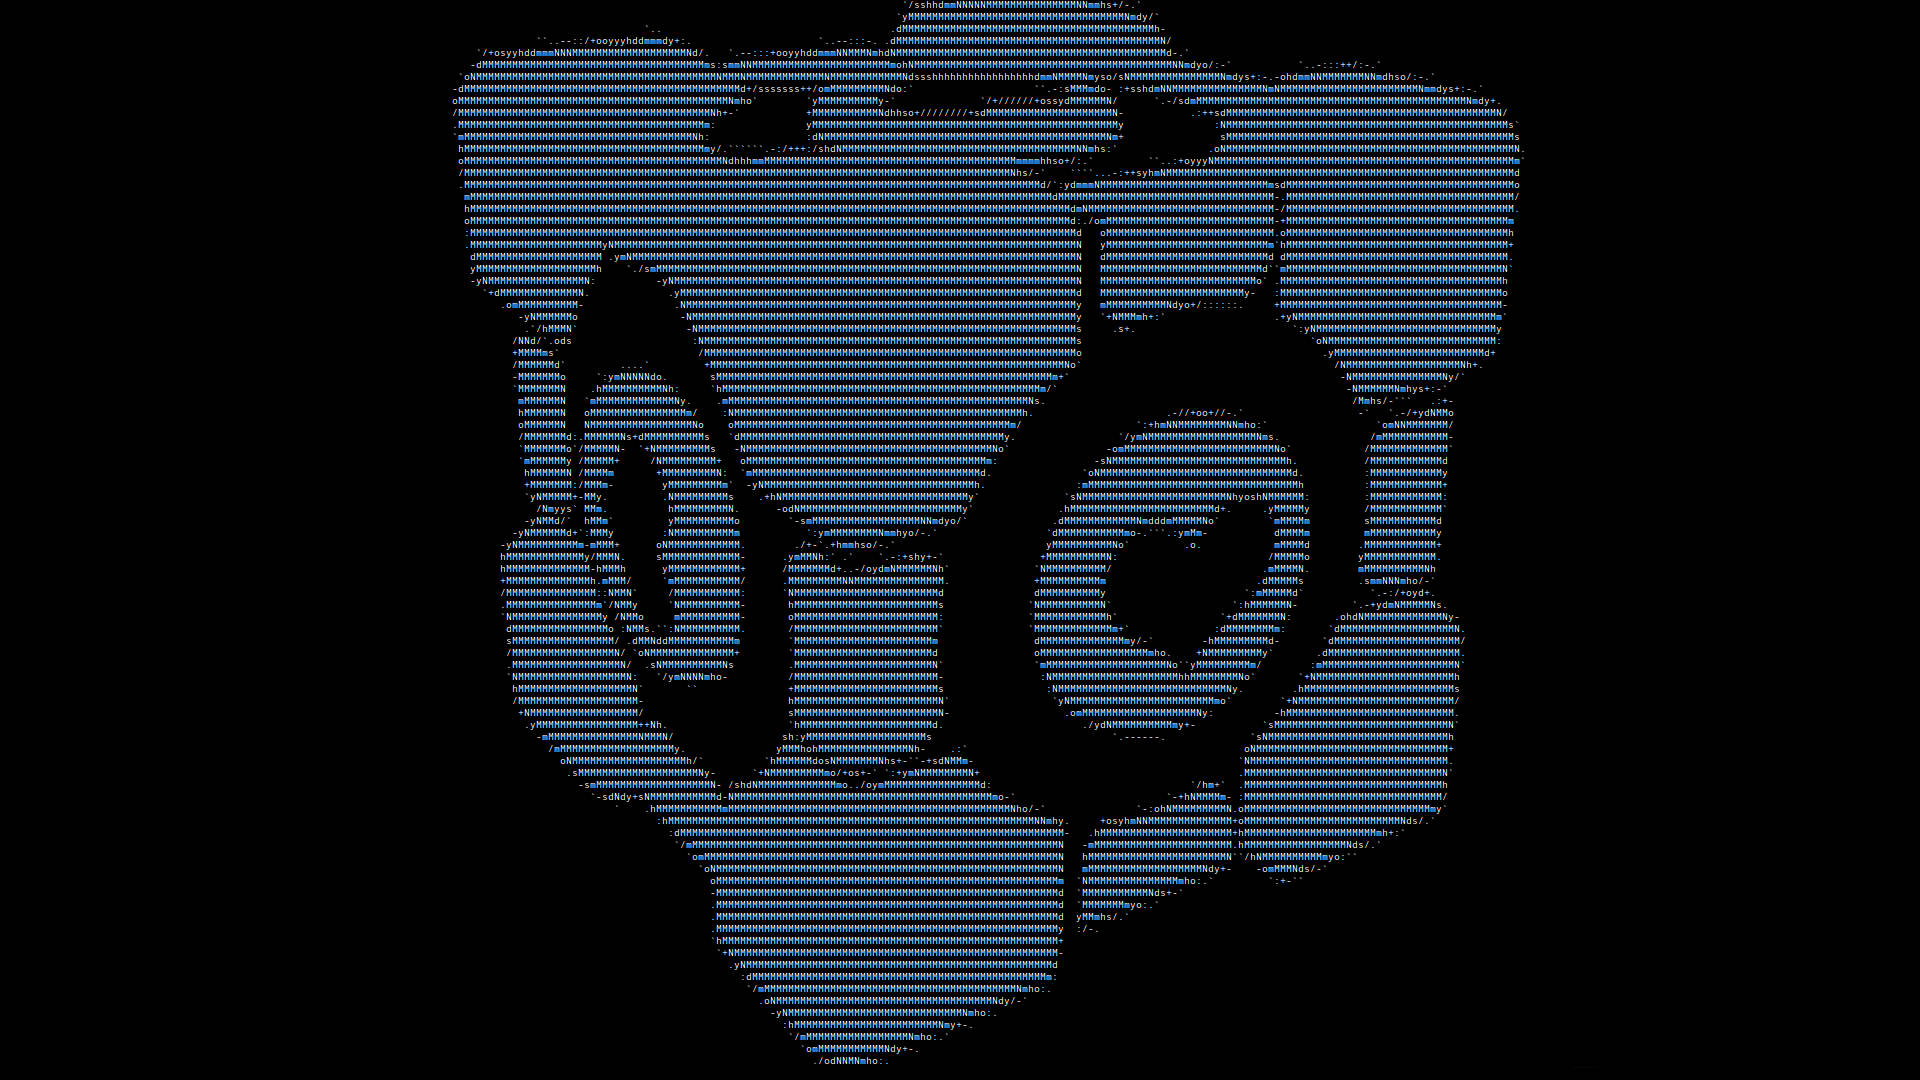 Ascii Text Companion Cube Background